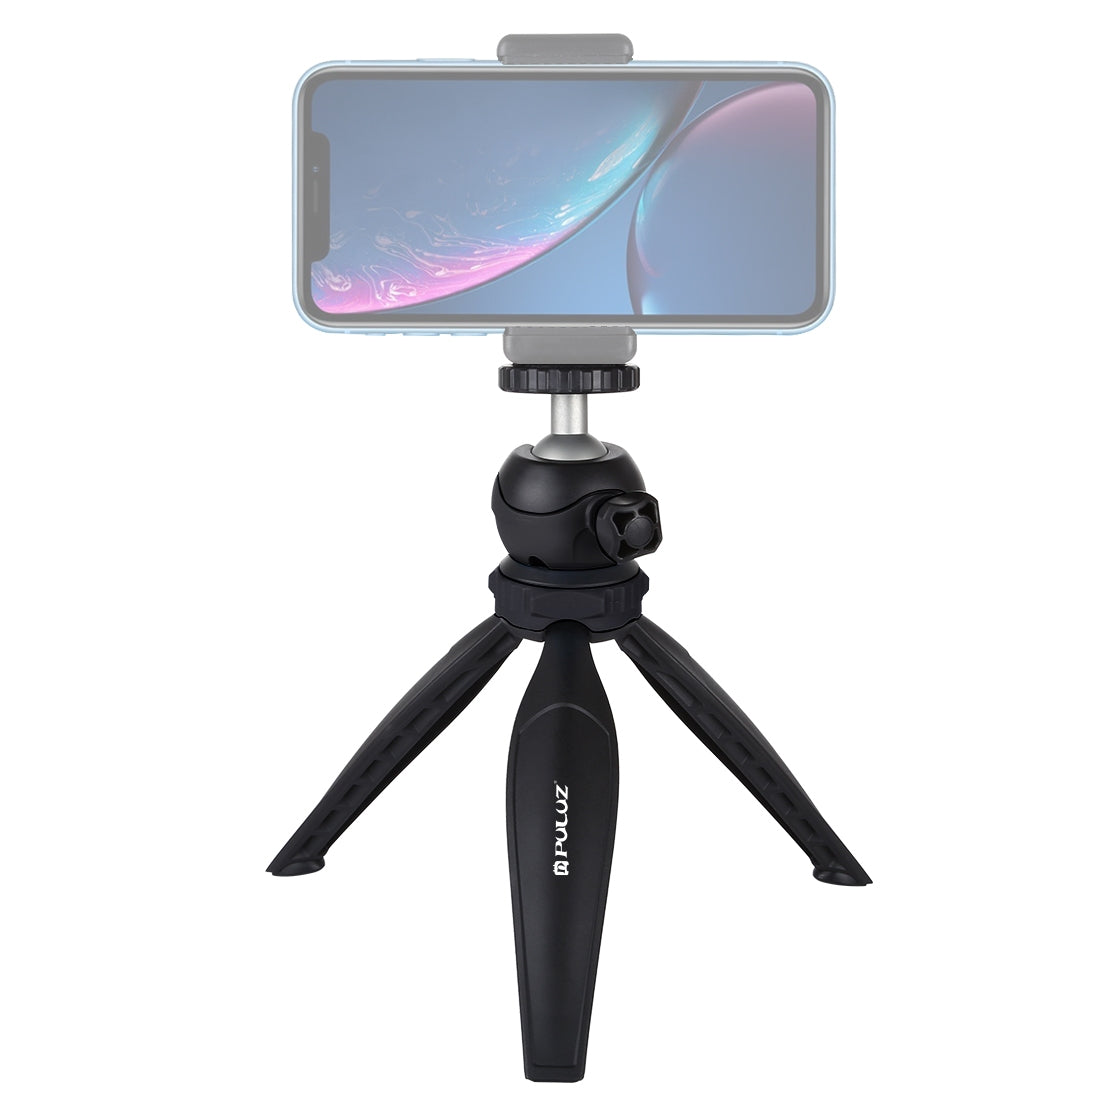 20cm Pocket Plastic Tripod Mount with 360 Degree Ball Head for Smartphones, GoPro, DSLR Cameras(Black)